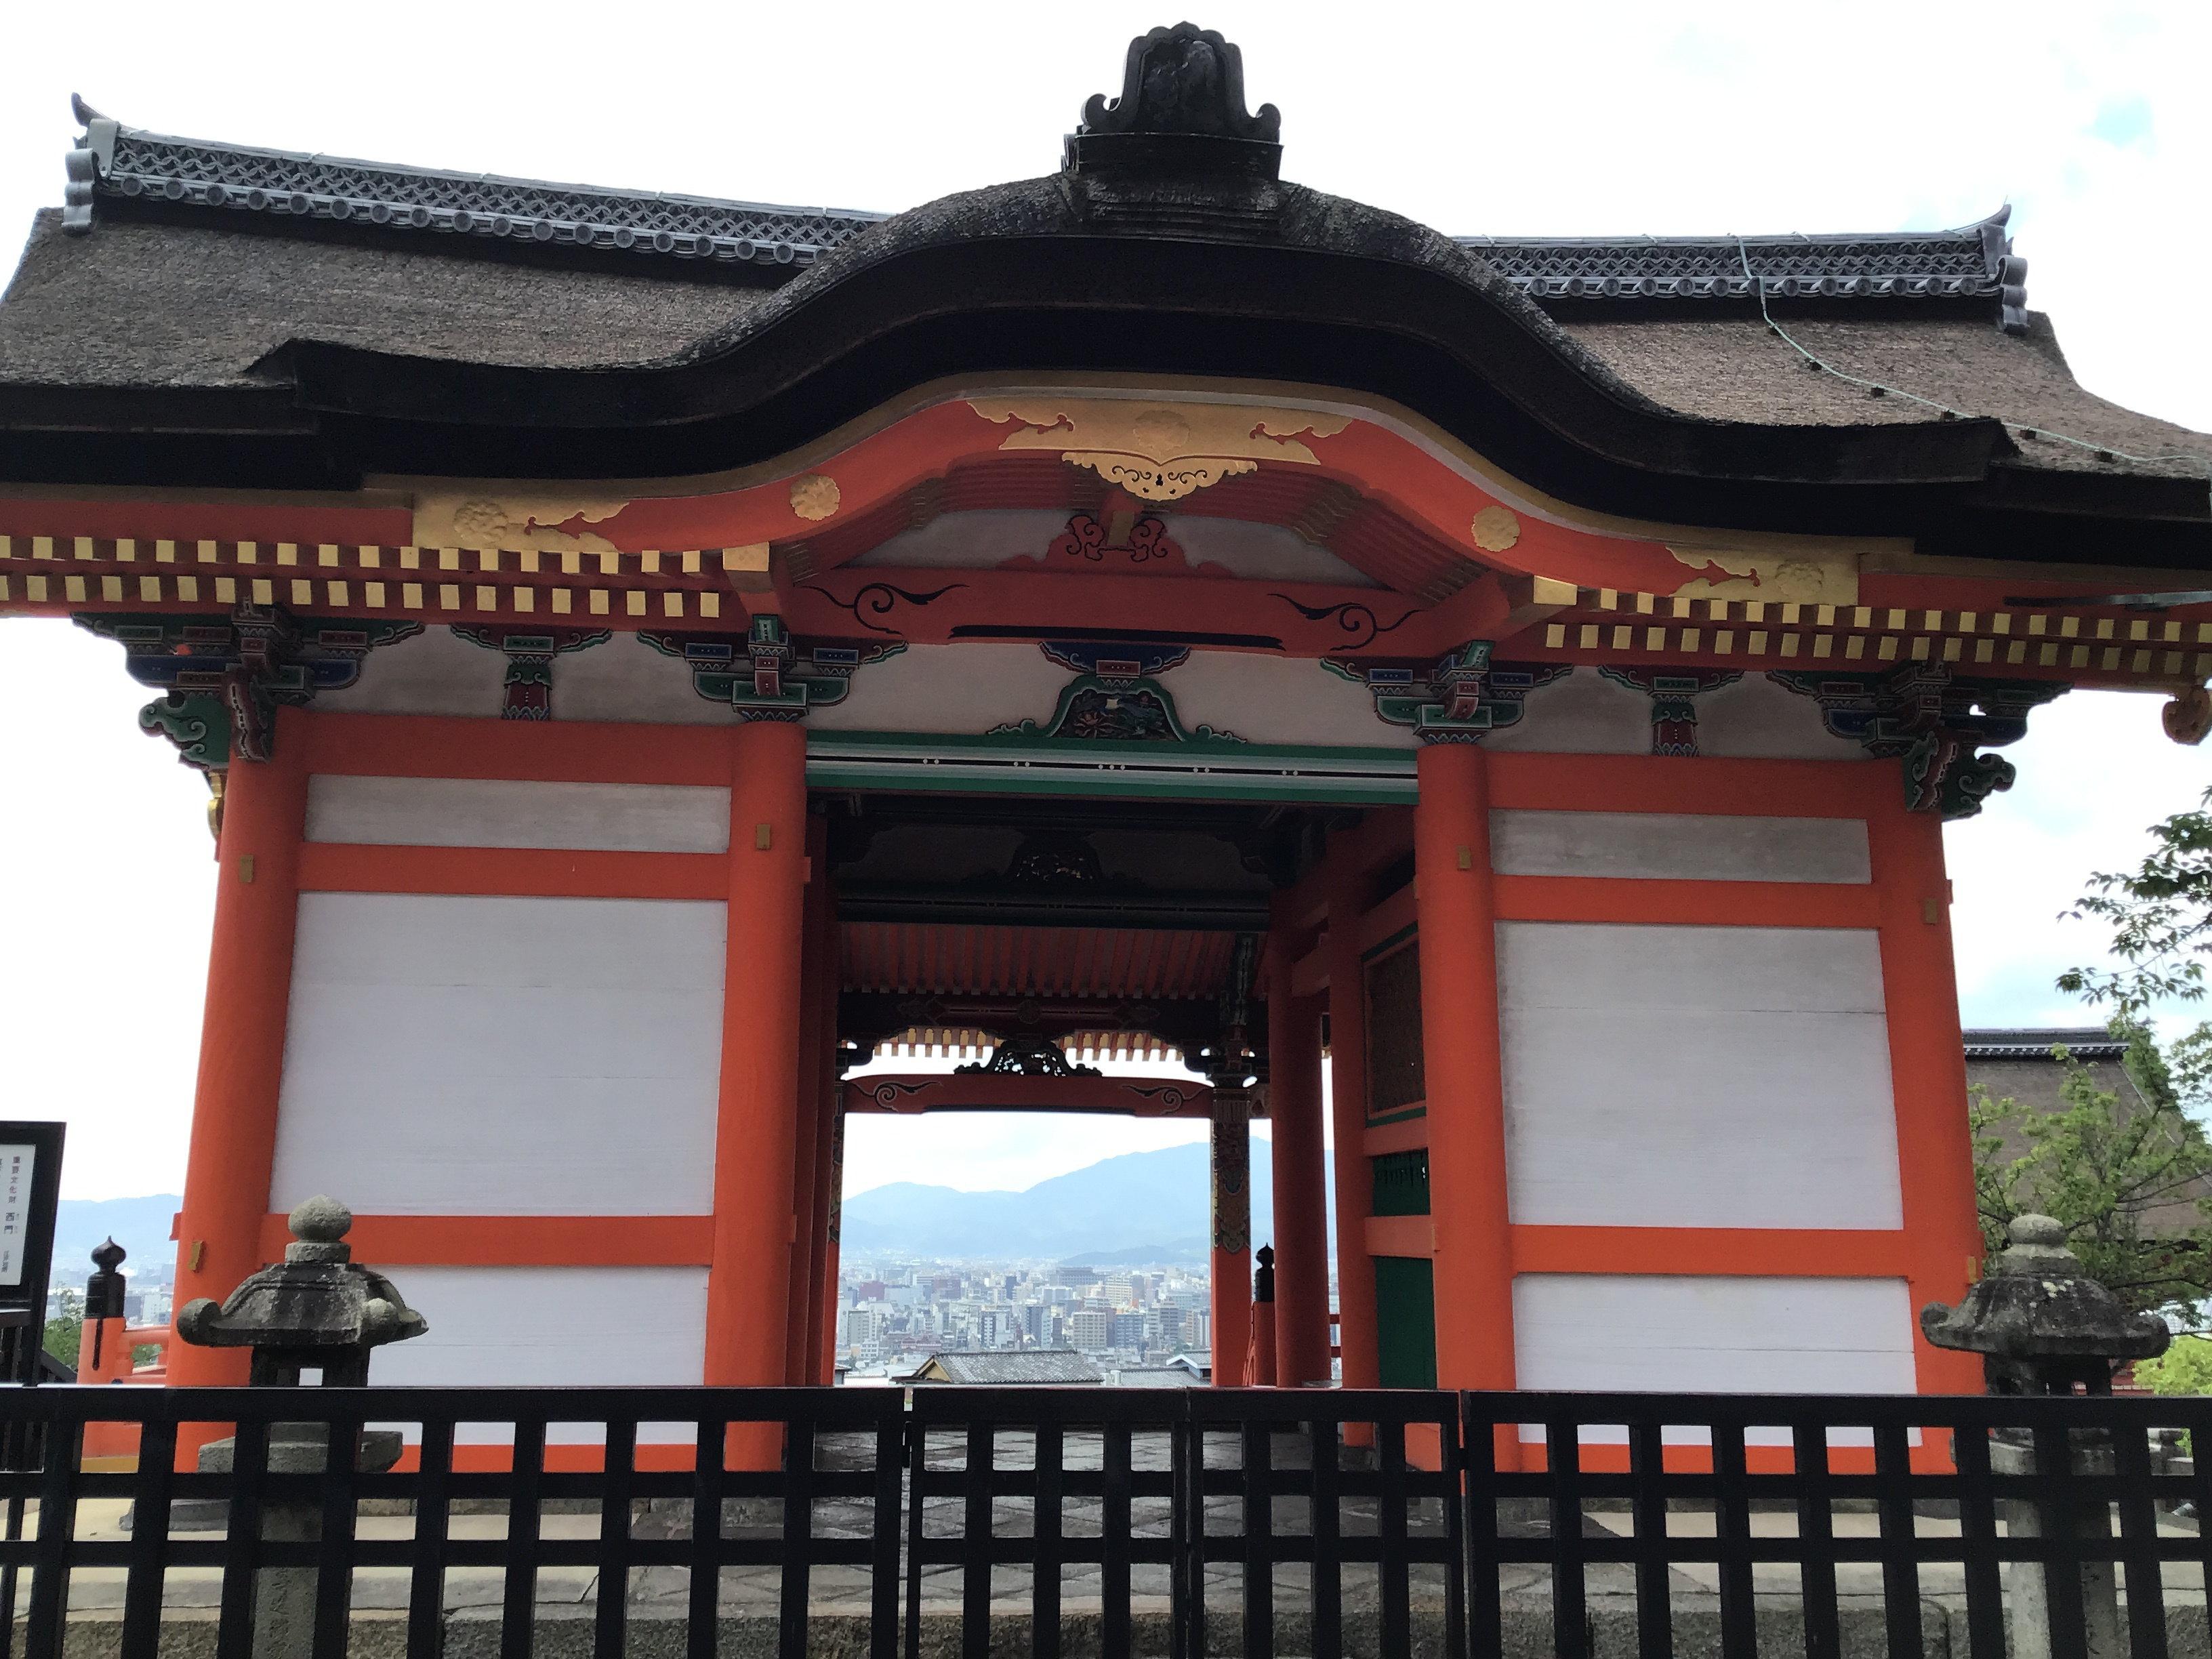 The city beyond the gate of Kiyomizu Temple